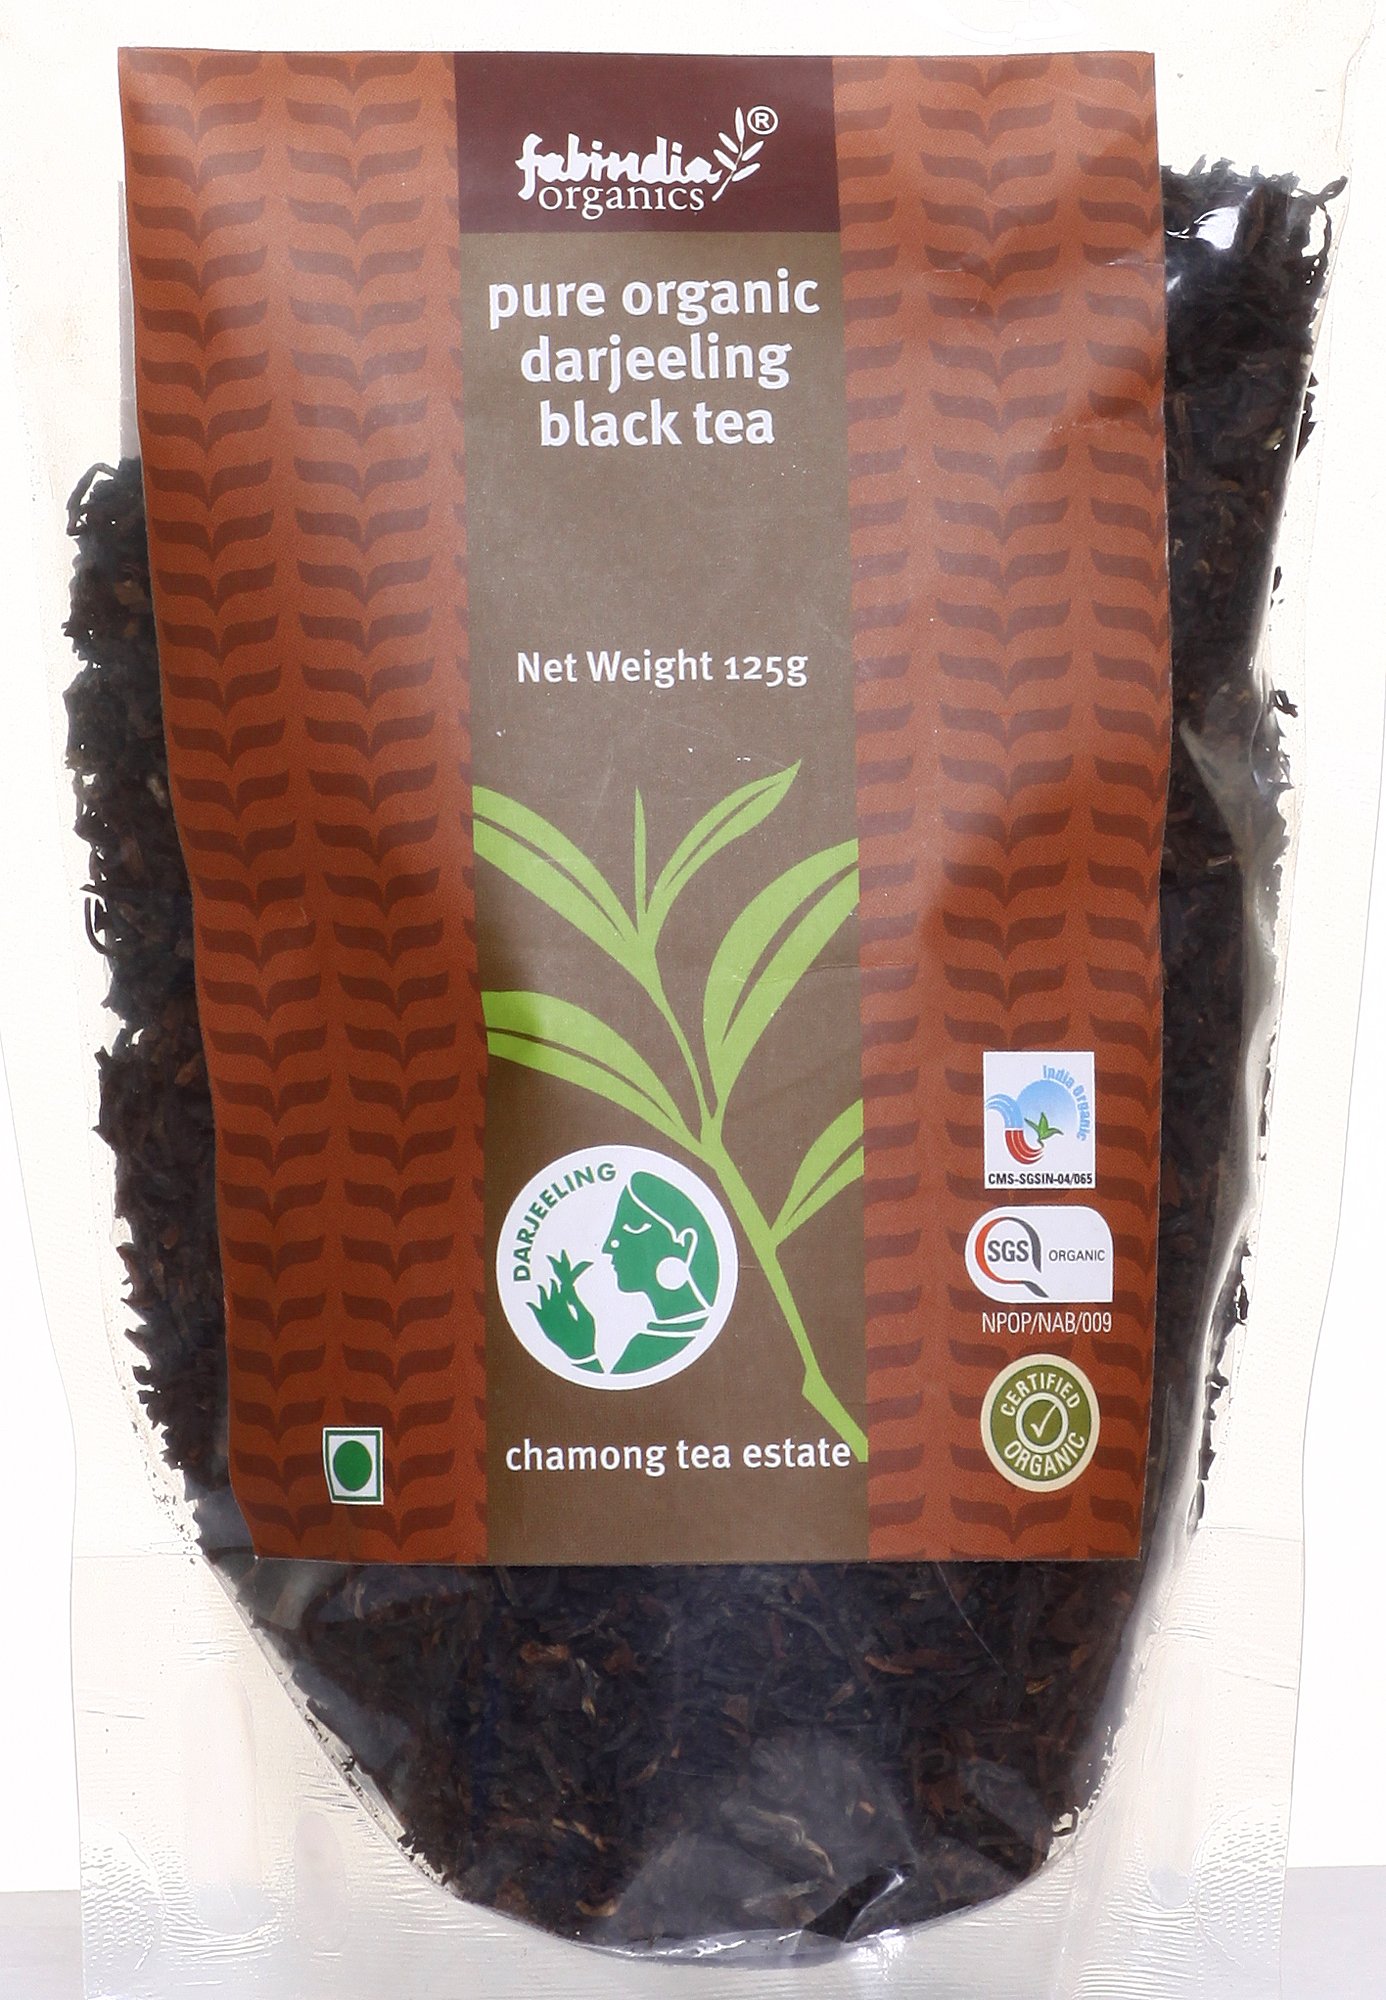 Fabindia Organics Pur Organic darjeeling Black Tea - book cover